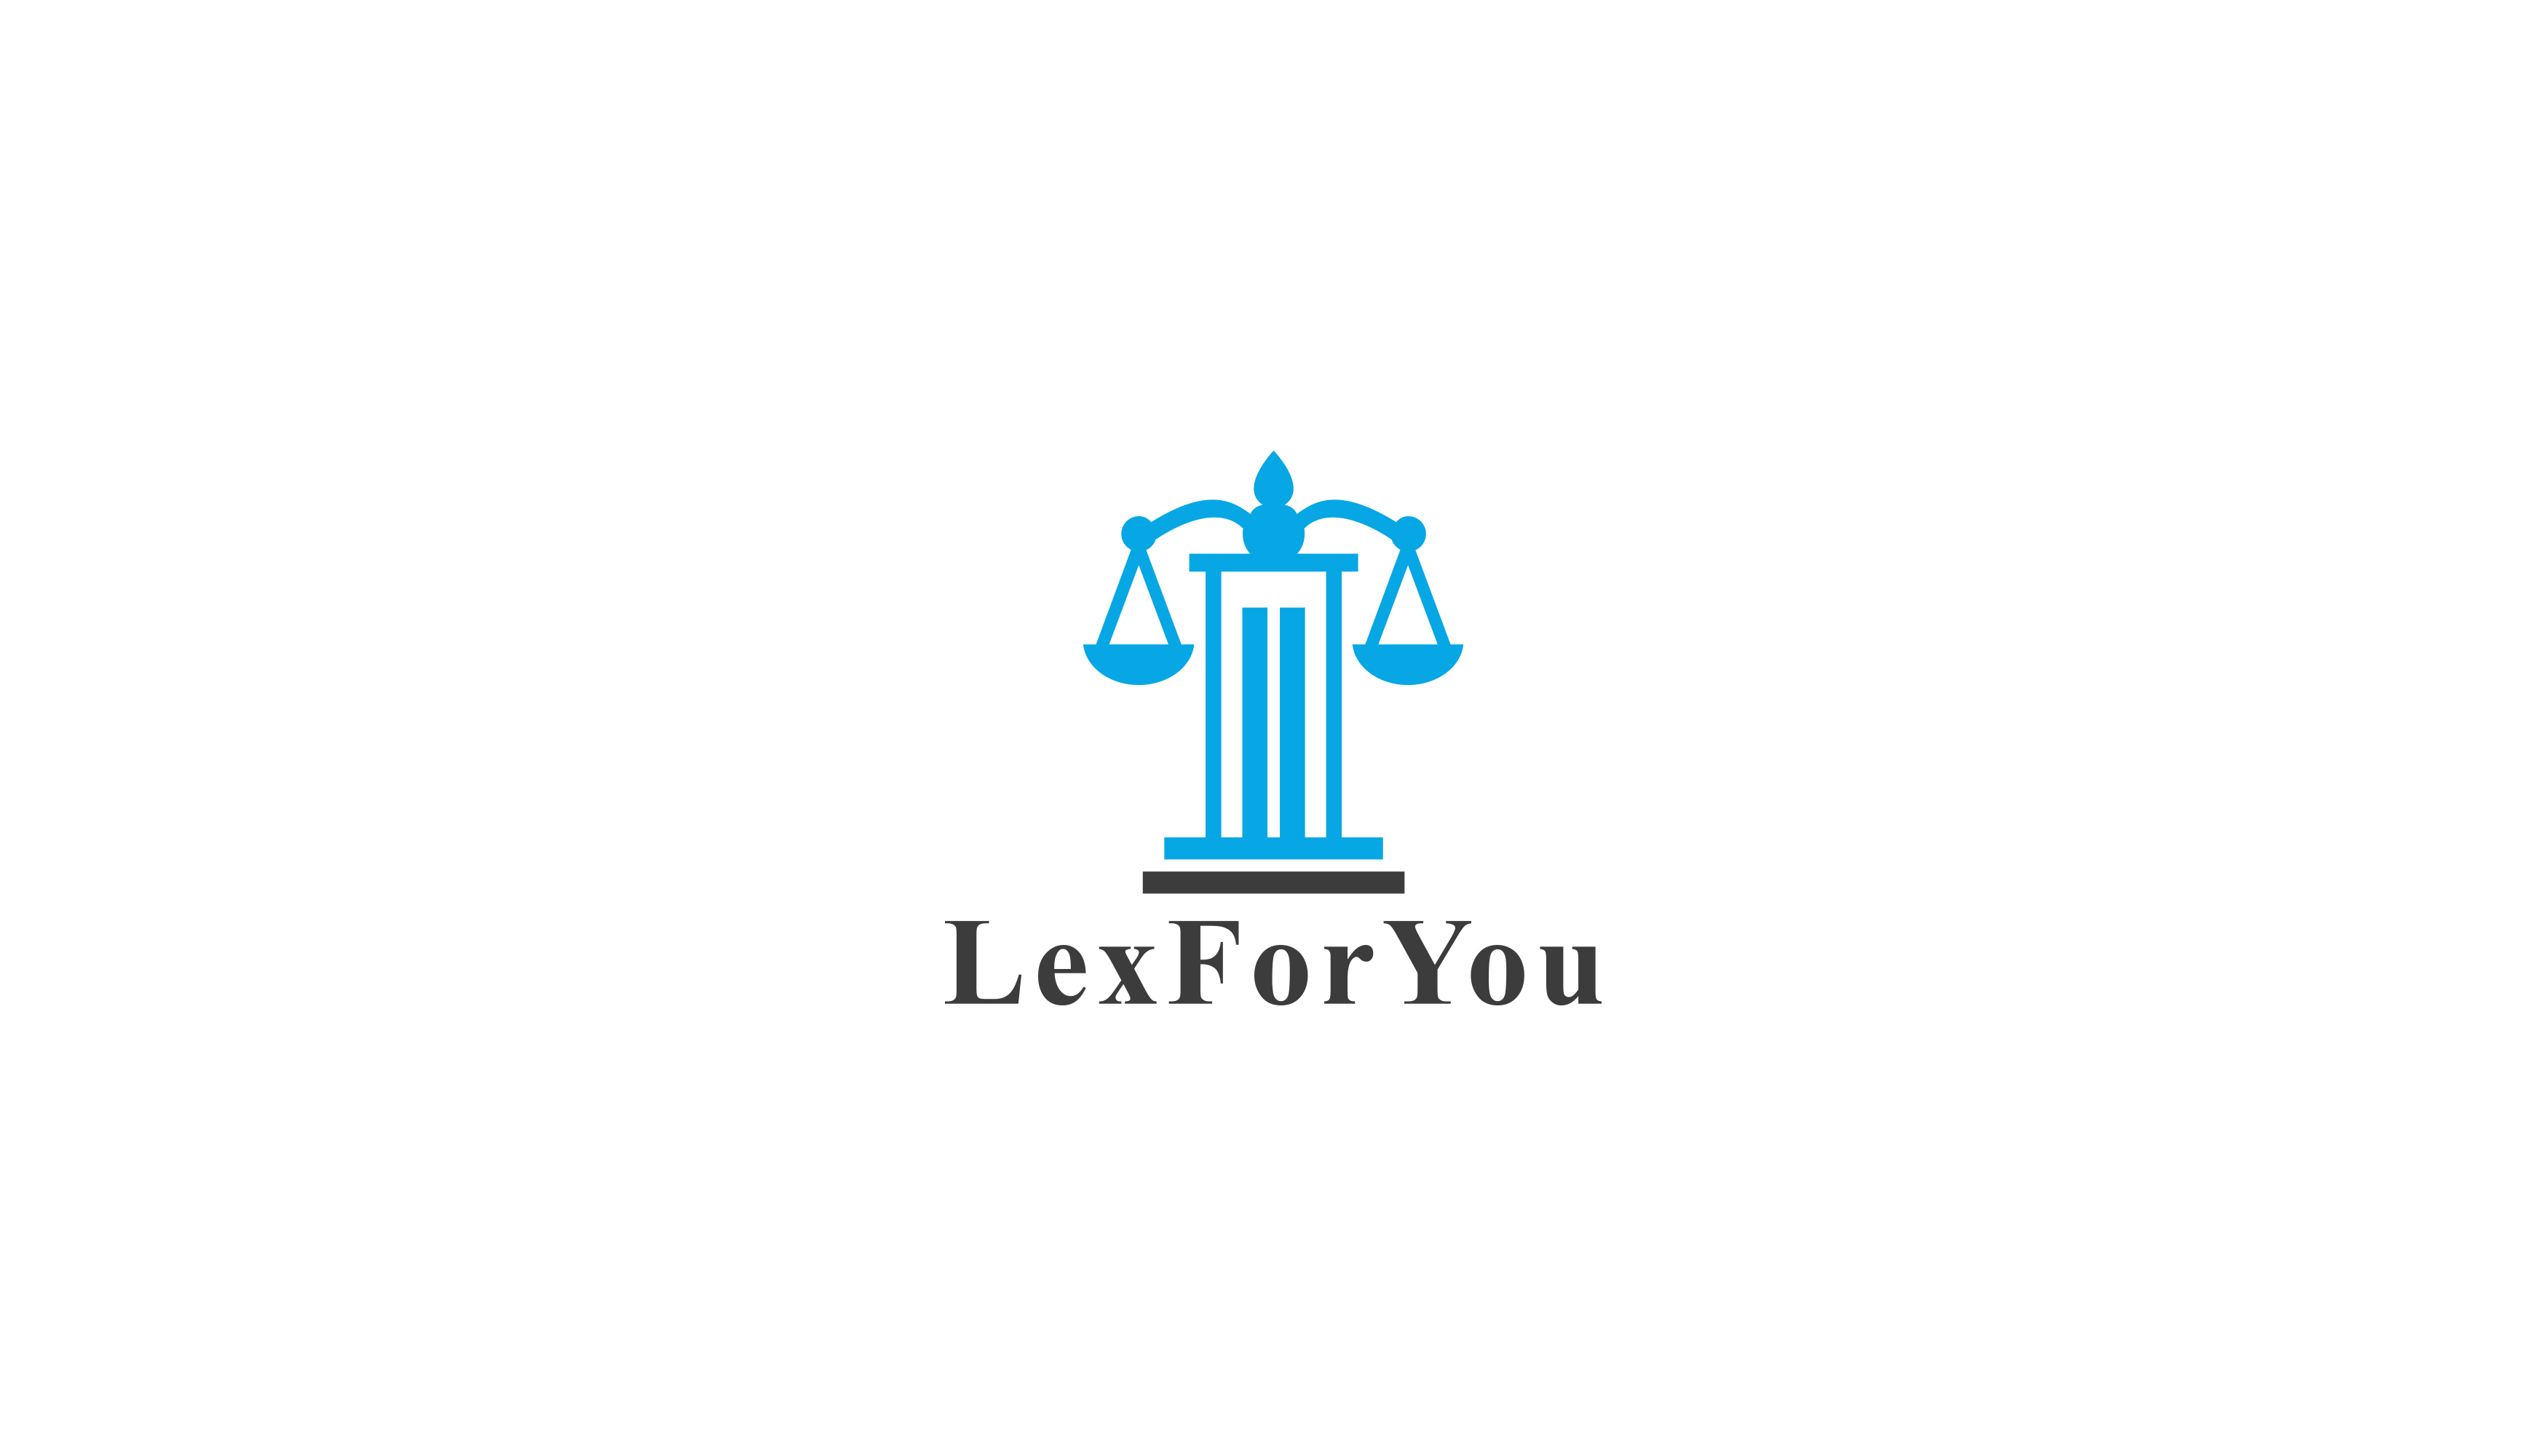 LexForYou Design #5